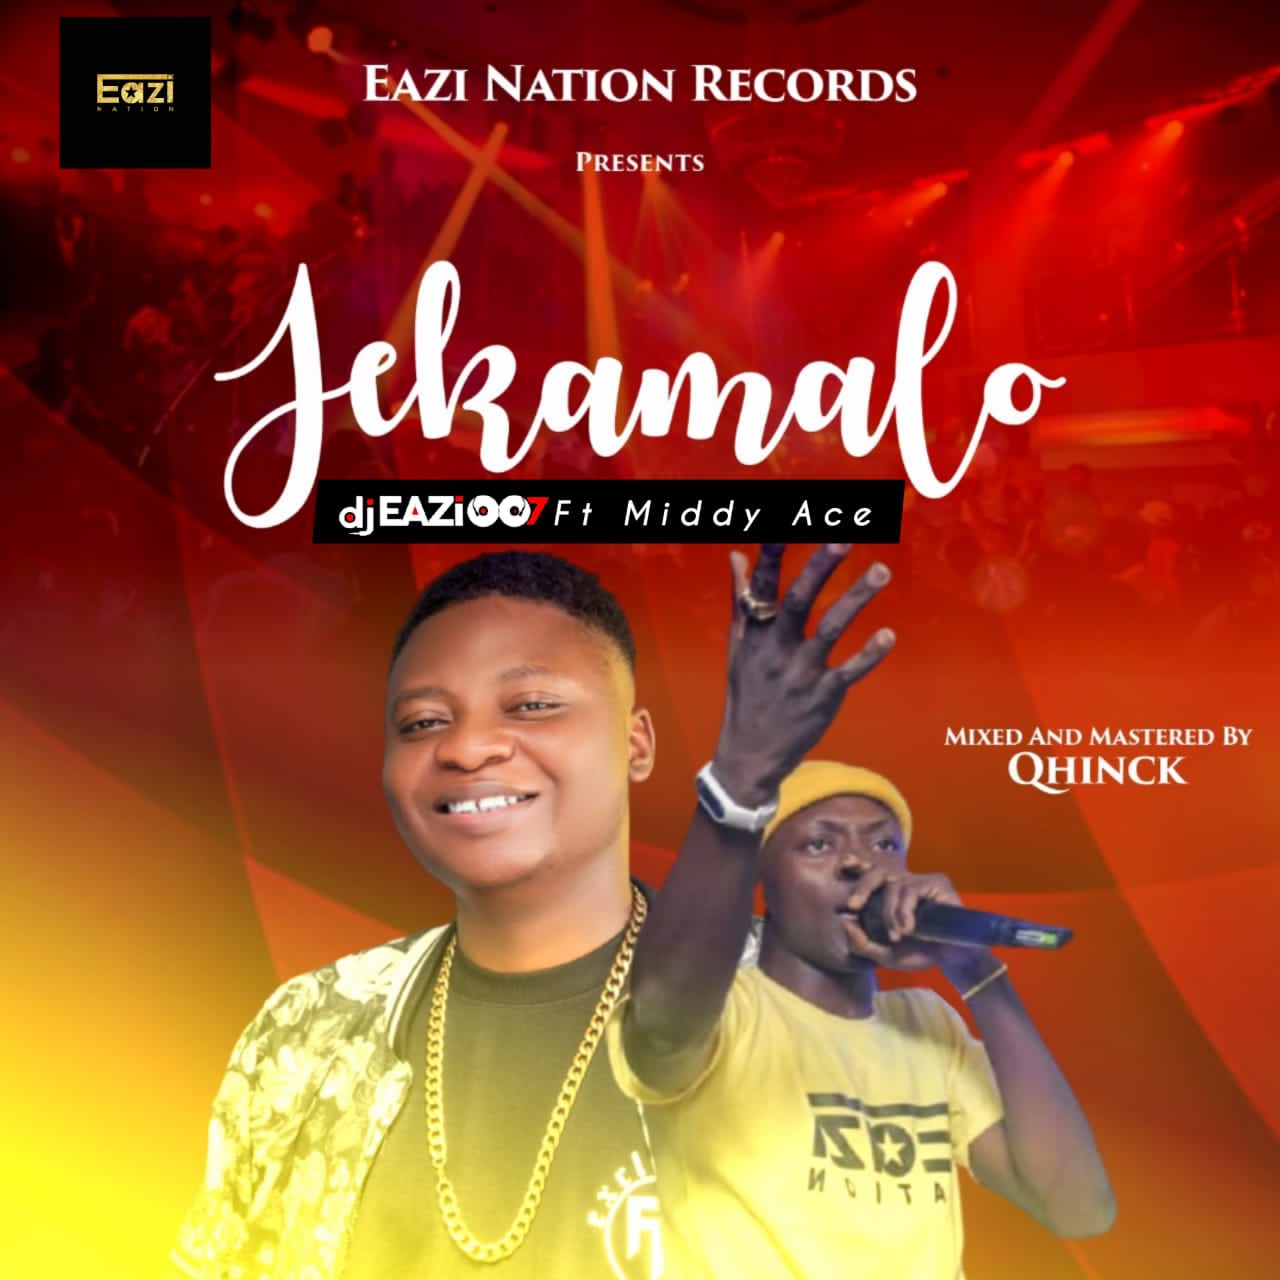 DJ Eazi007 Ft. Middy Ace – Jekamalo mp3 download